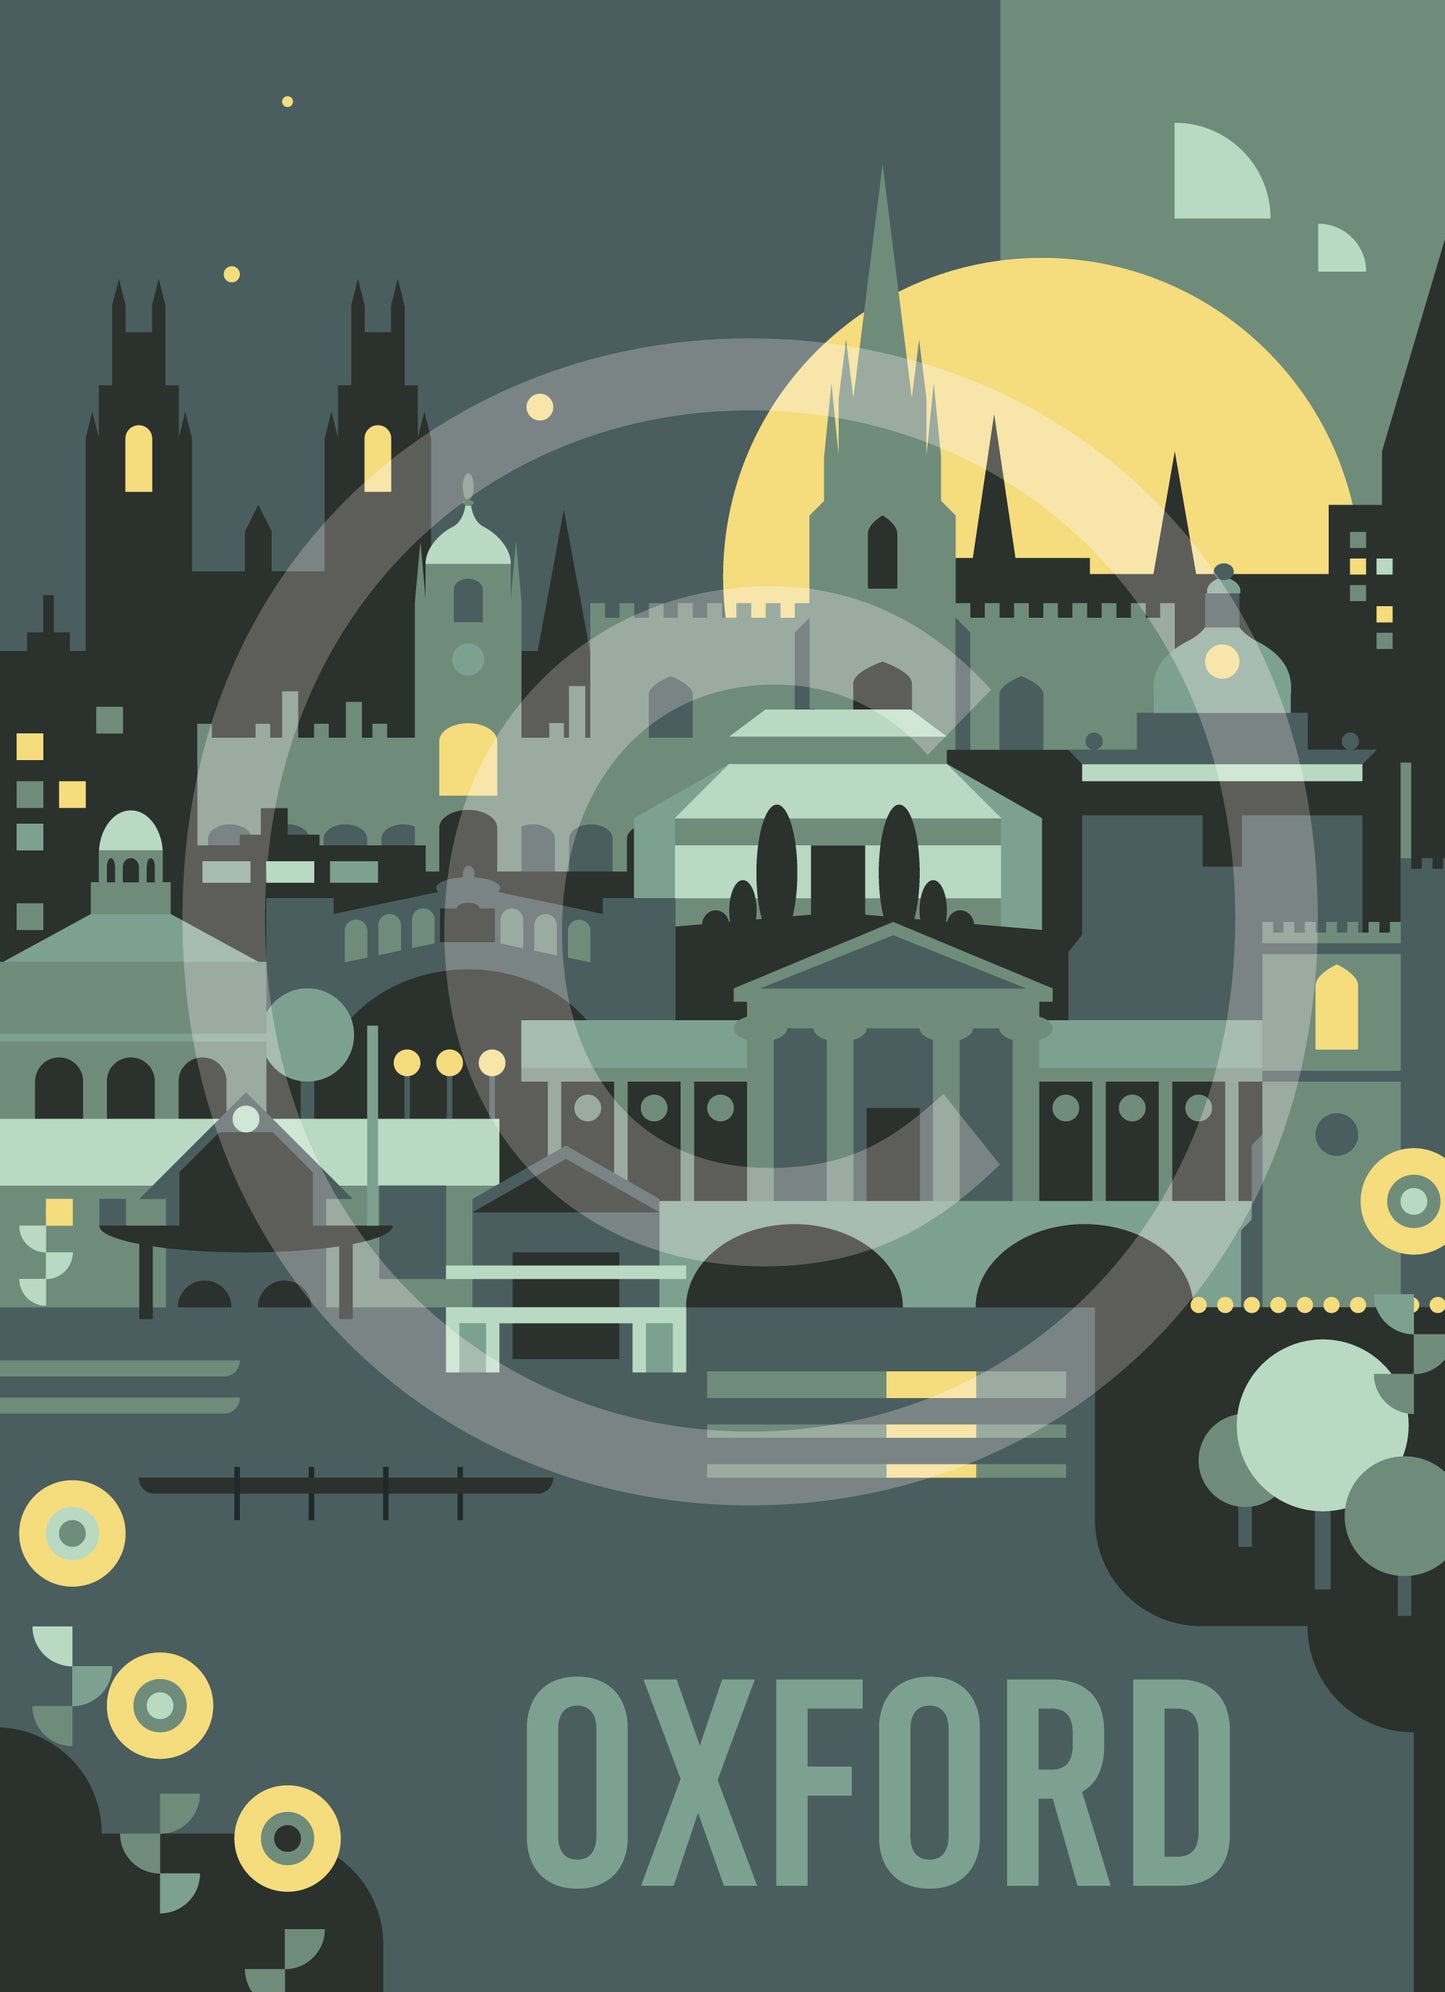 Oxford Travel Art Print